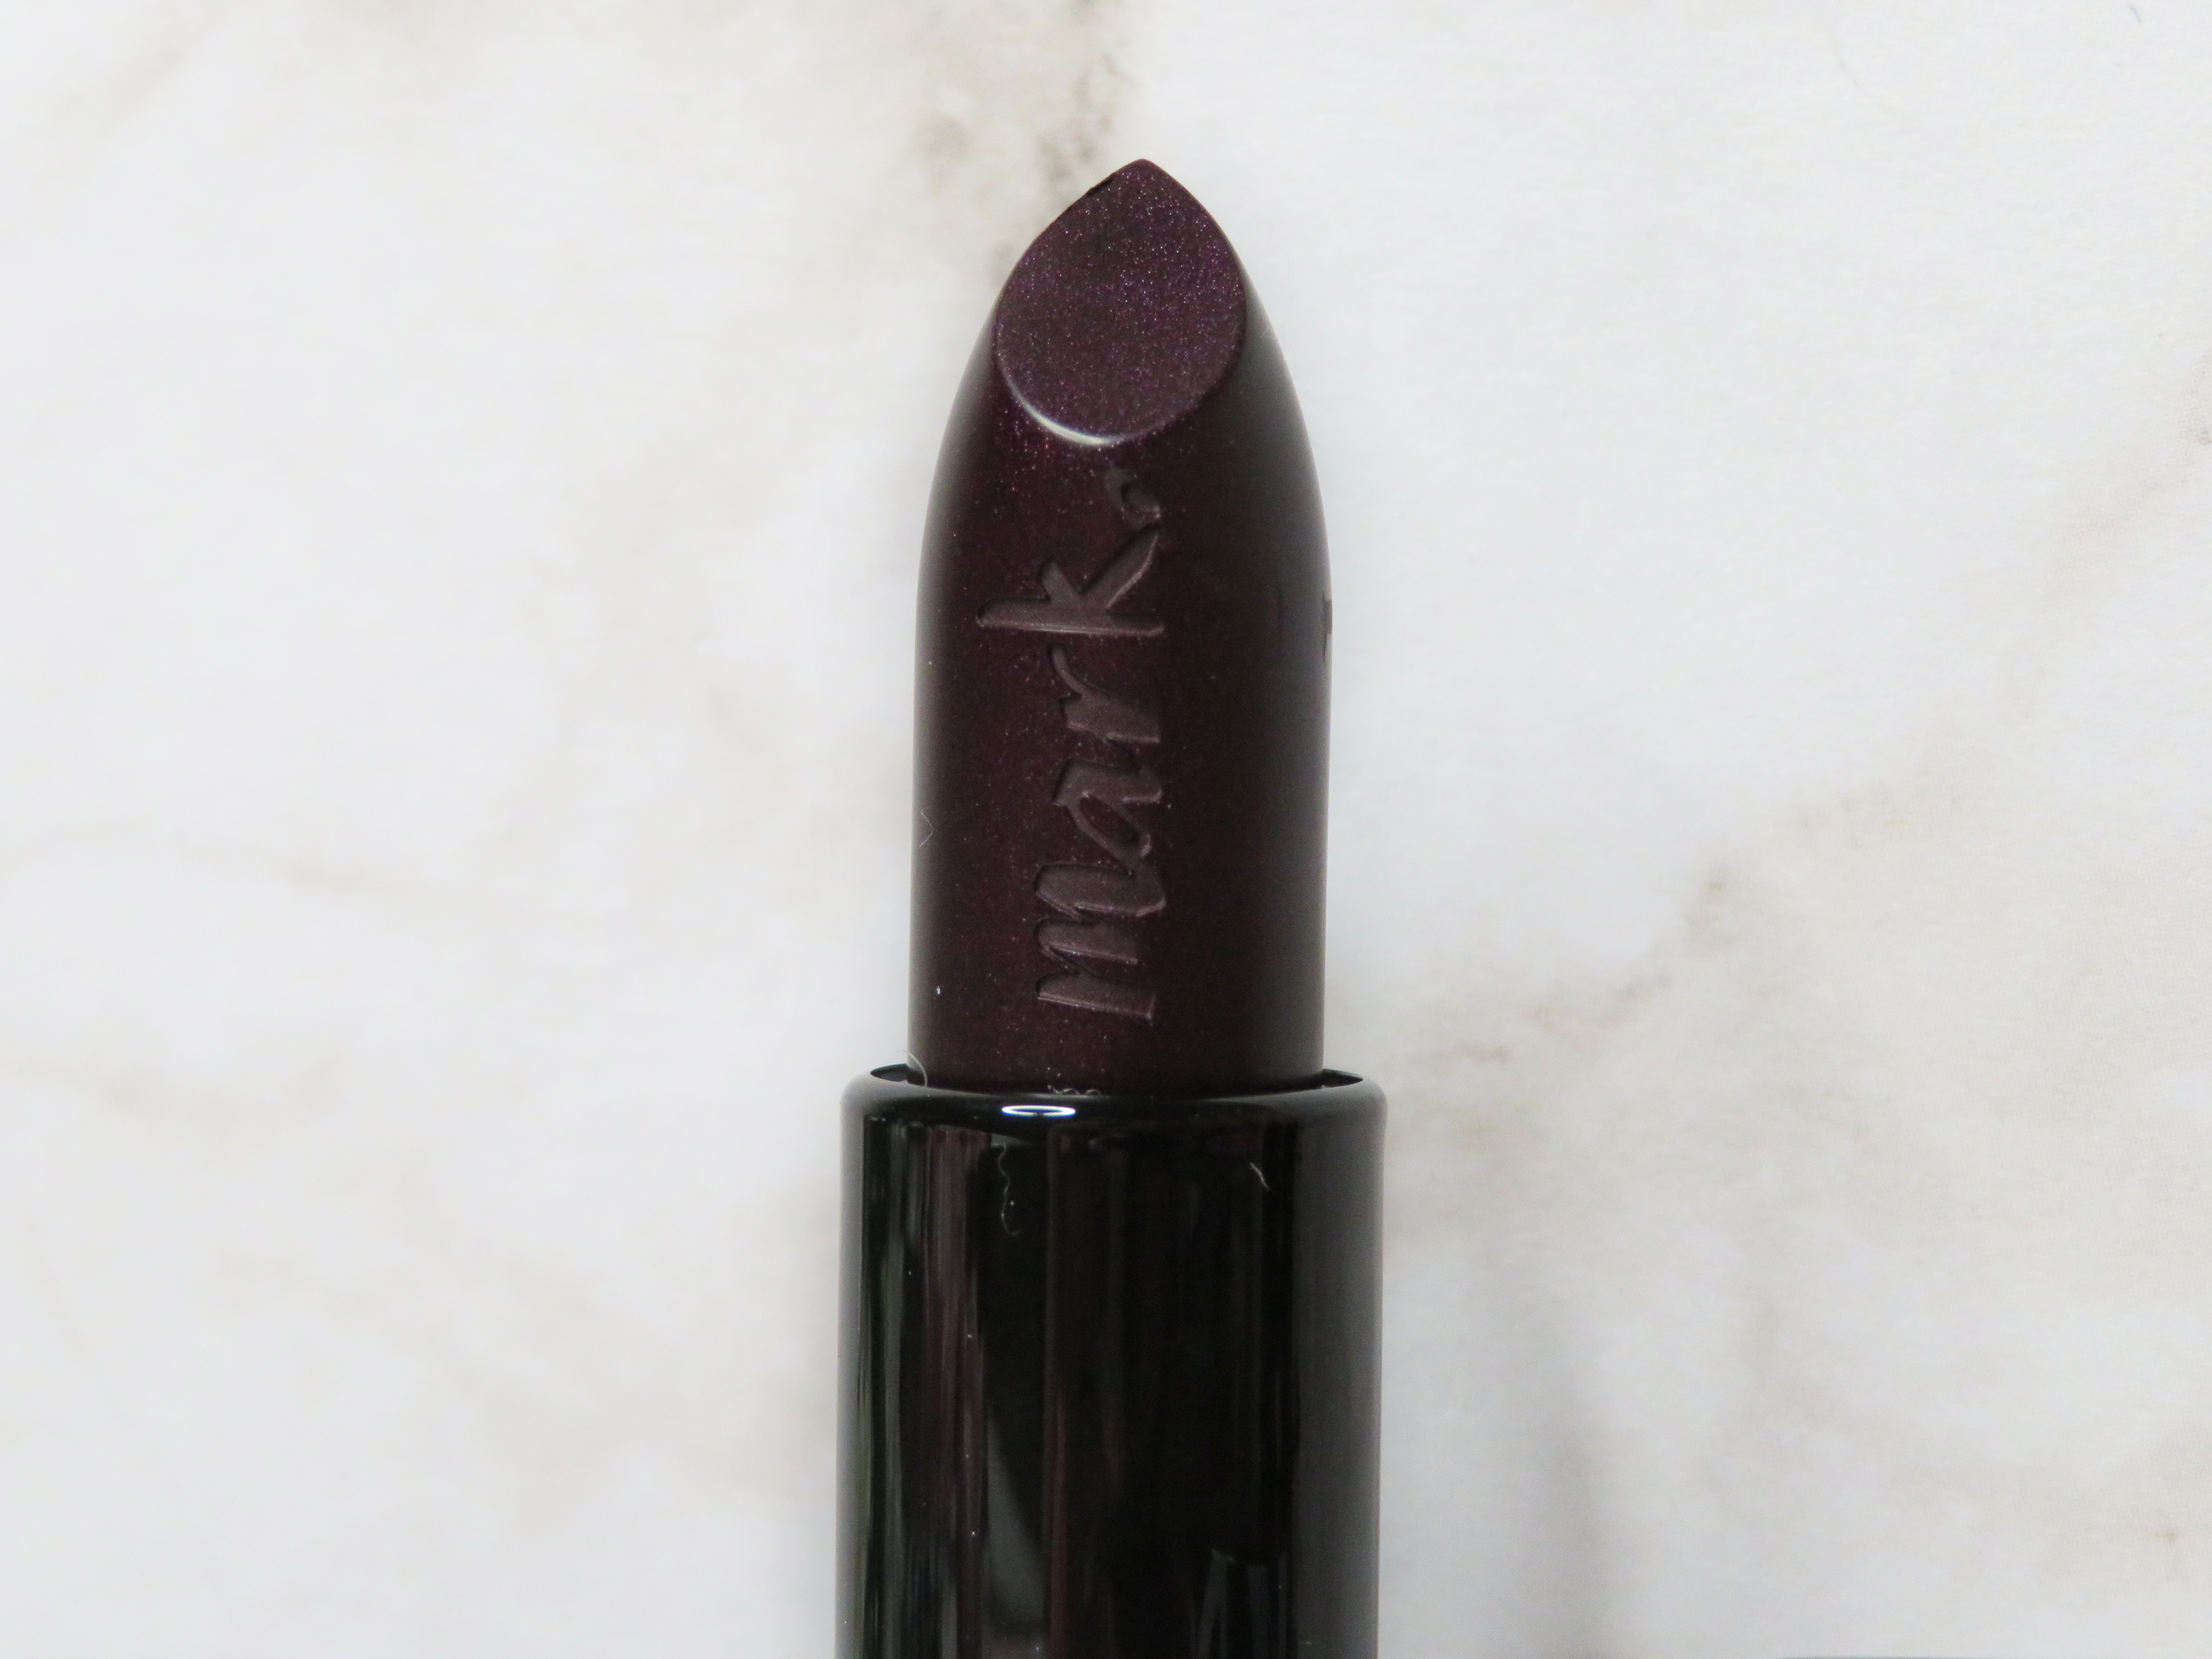 Temptress - Avon Mark Epic Lipsticks - Miss Boux